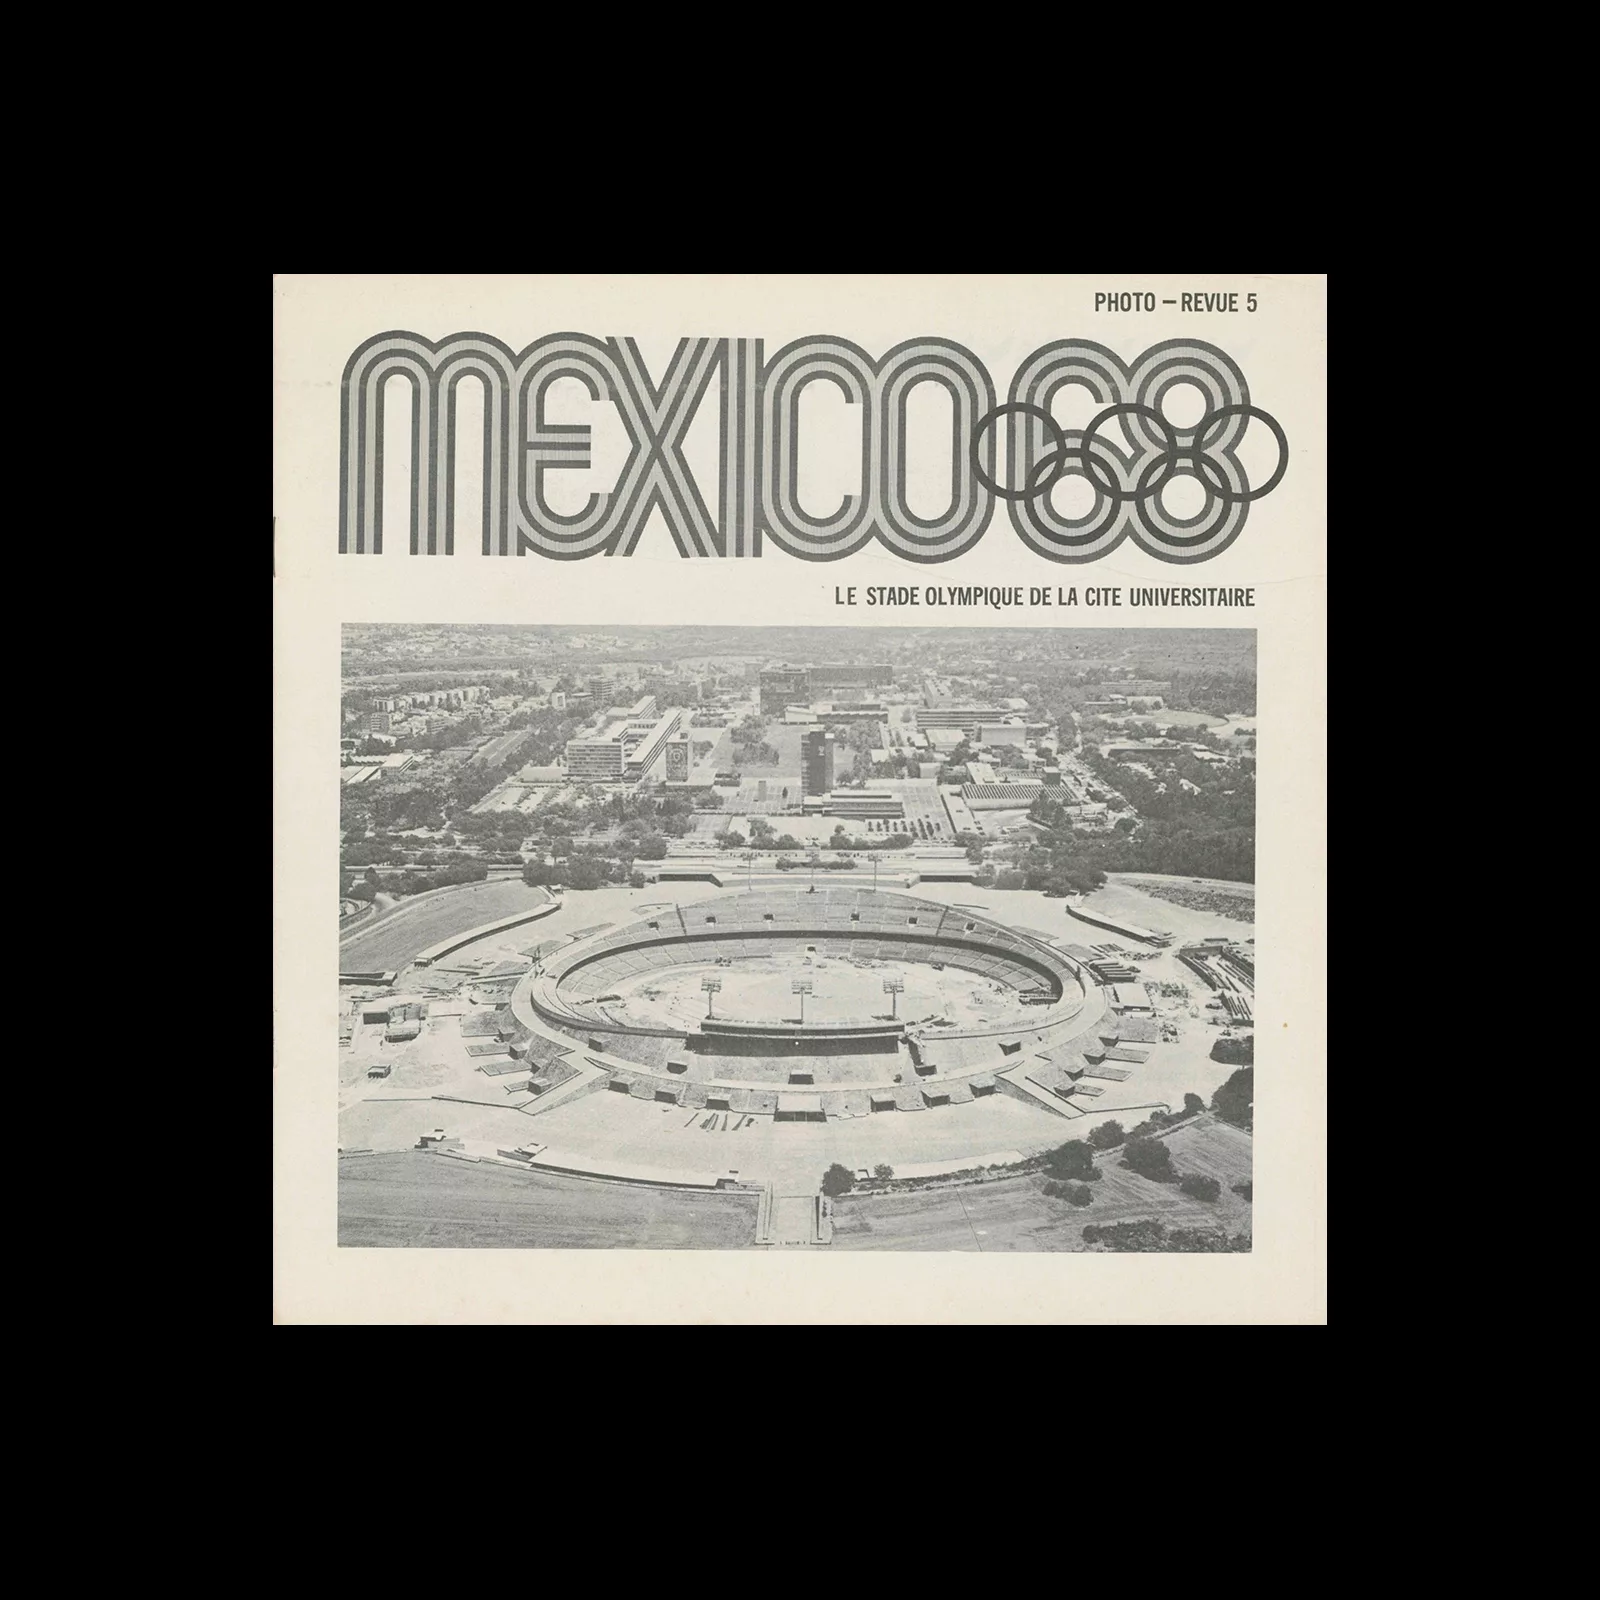 Mexico 1968, Photo - Revue 5, 1968. Designed by Lance Wyman